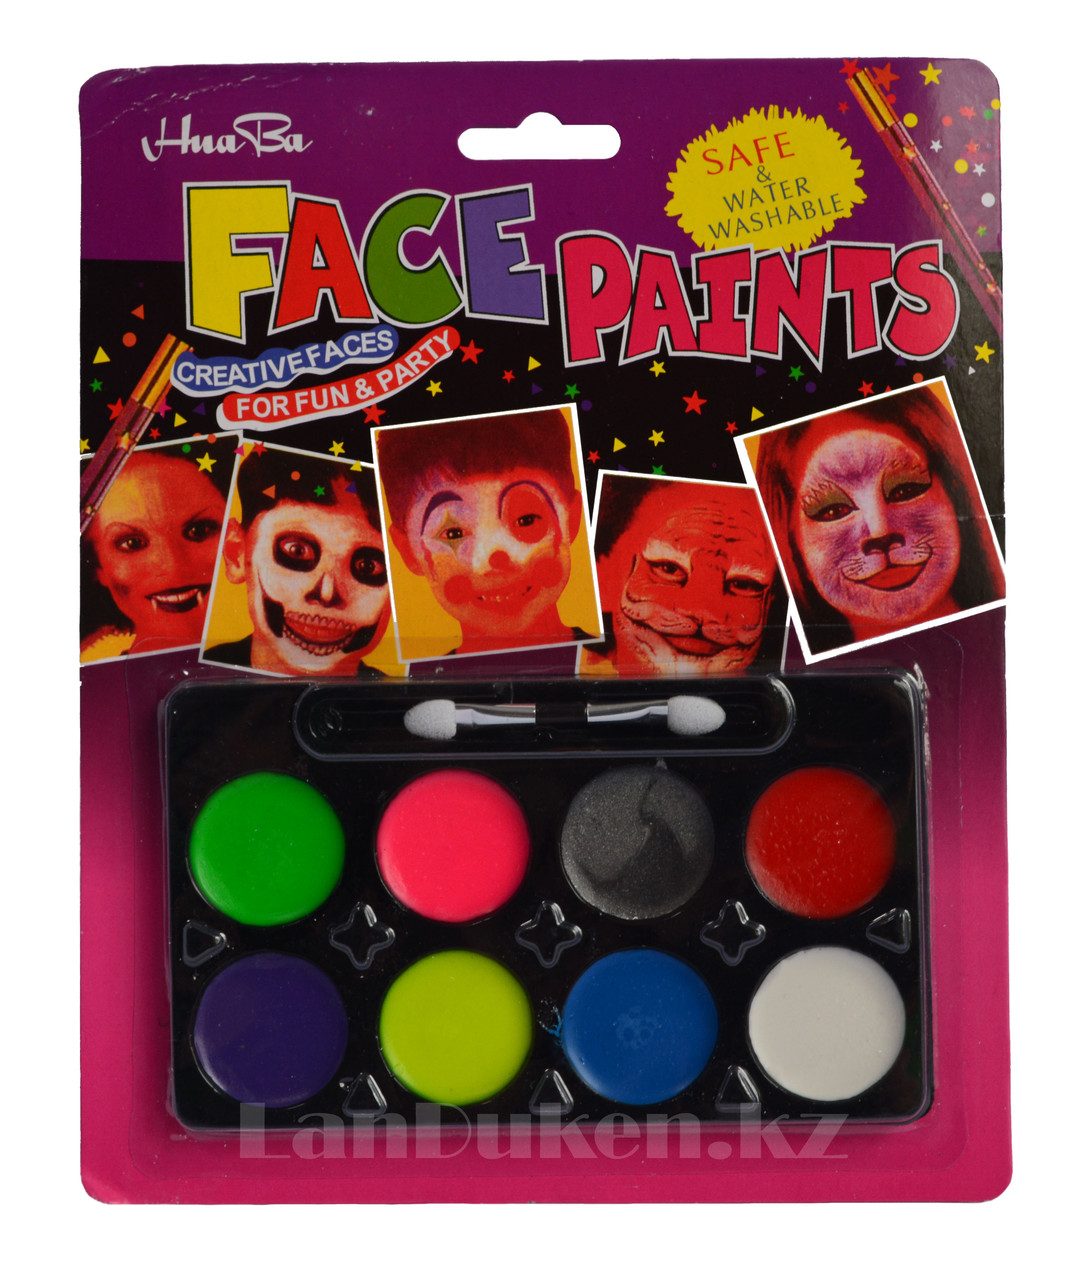 Аквагрим Face Paints, краски для лица, аквагрим для детей